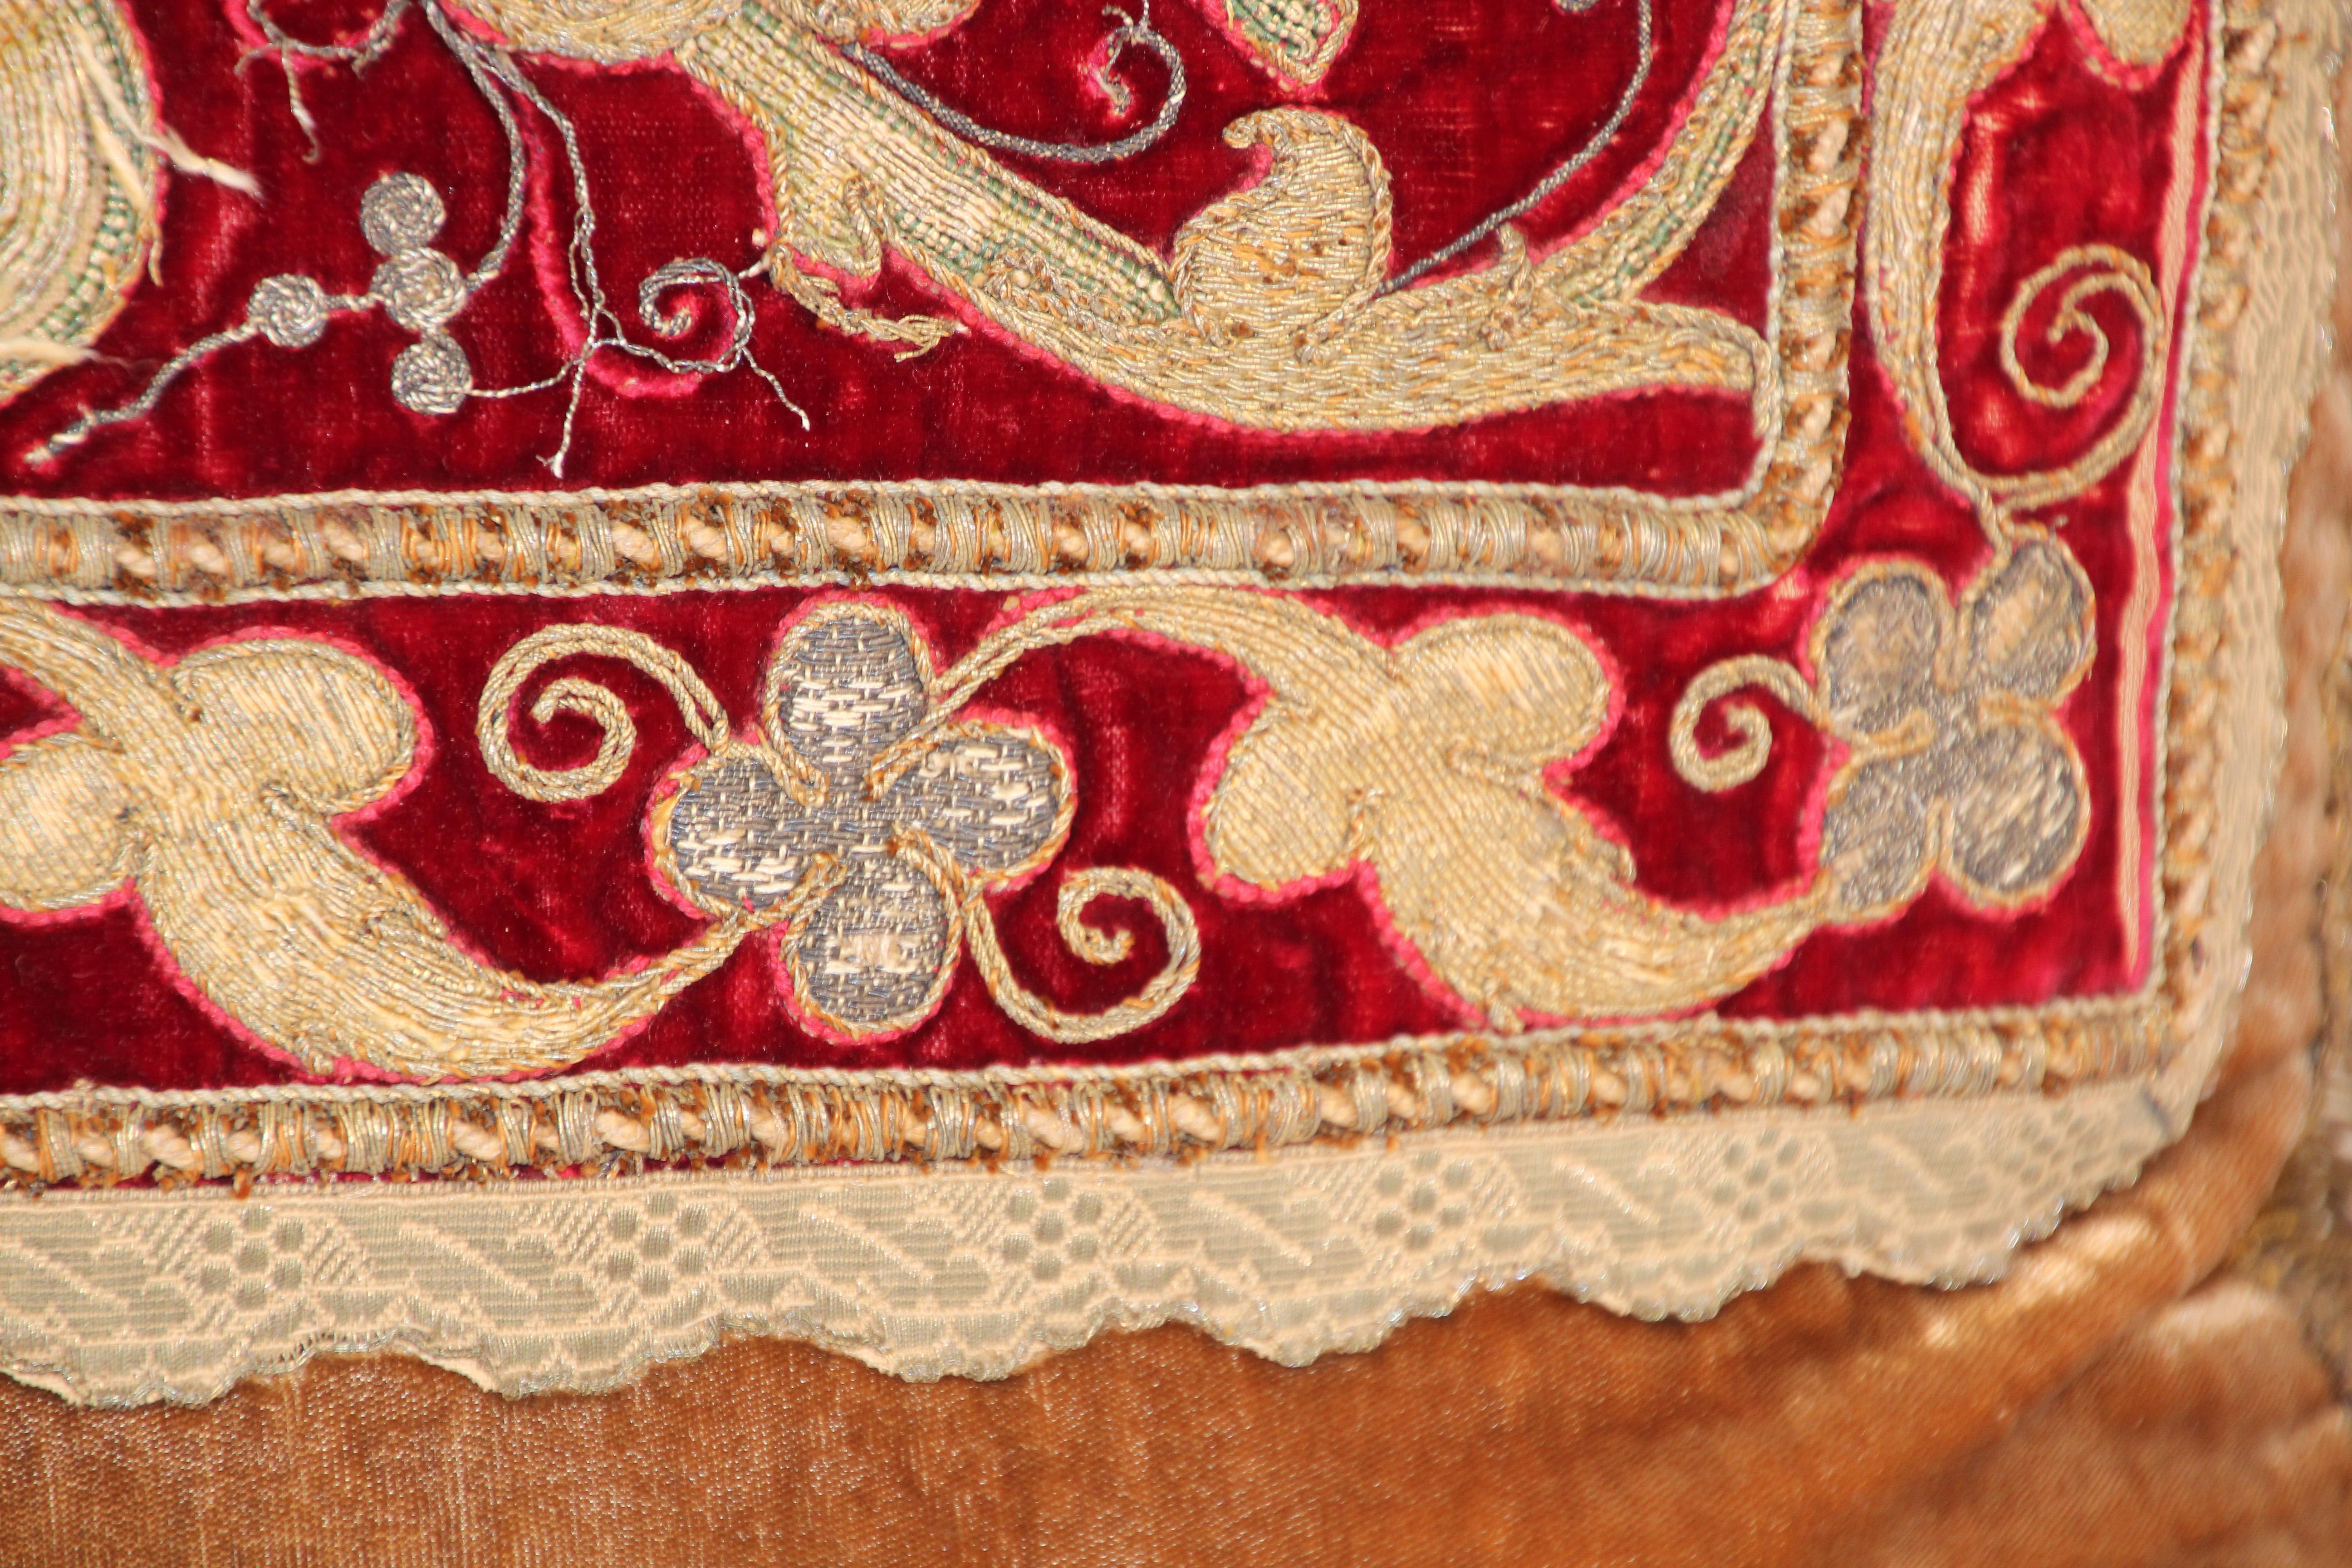 Hand-Crafted Antique Turkish Ottoman Silk Pillow with Metallic Threads